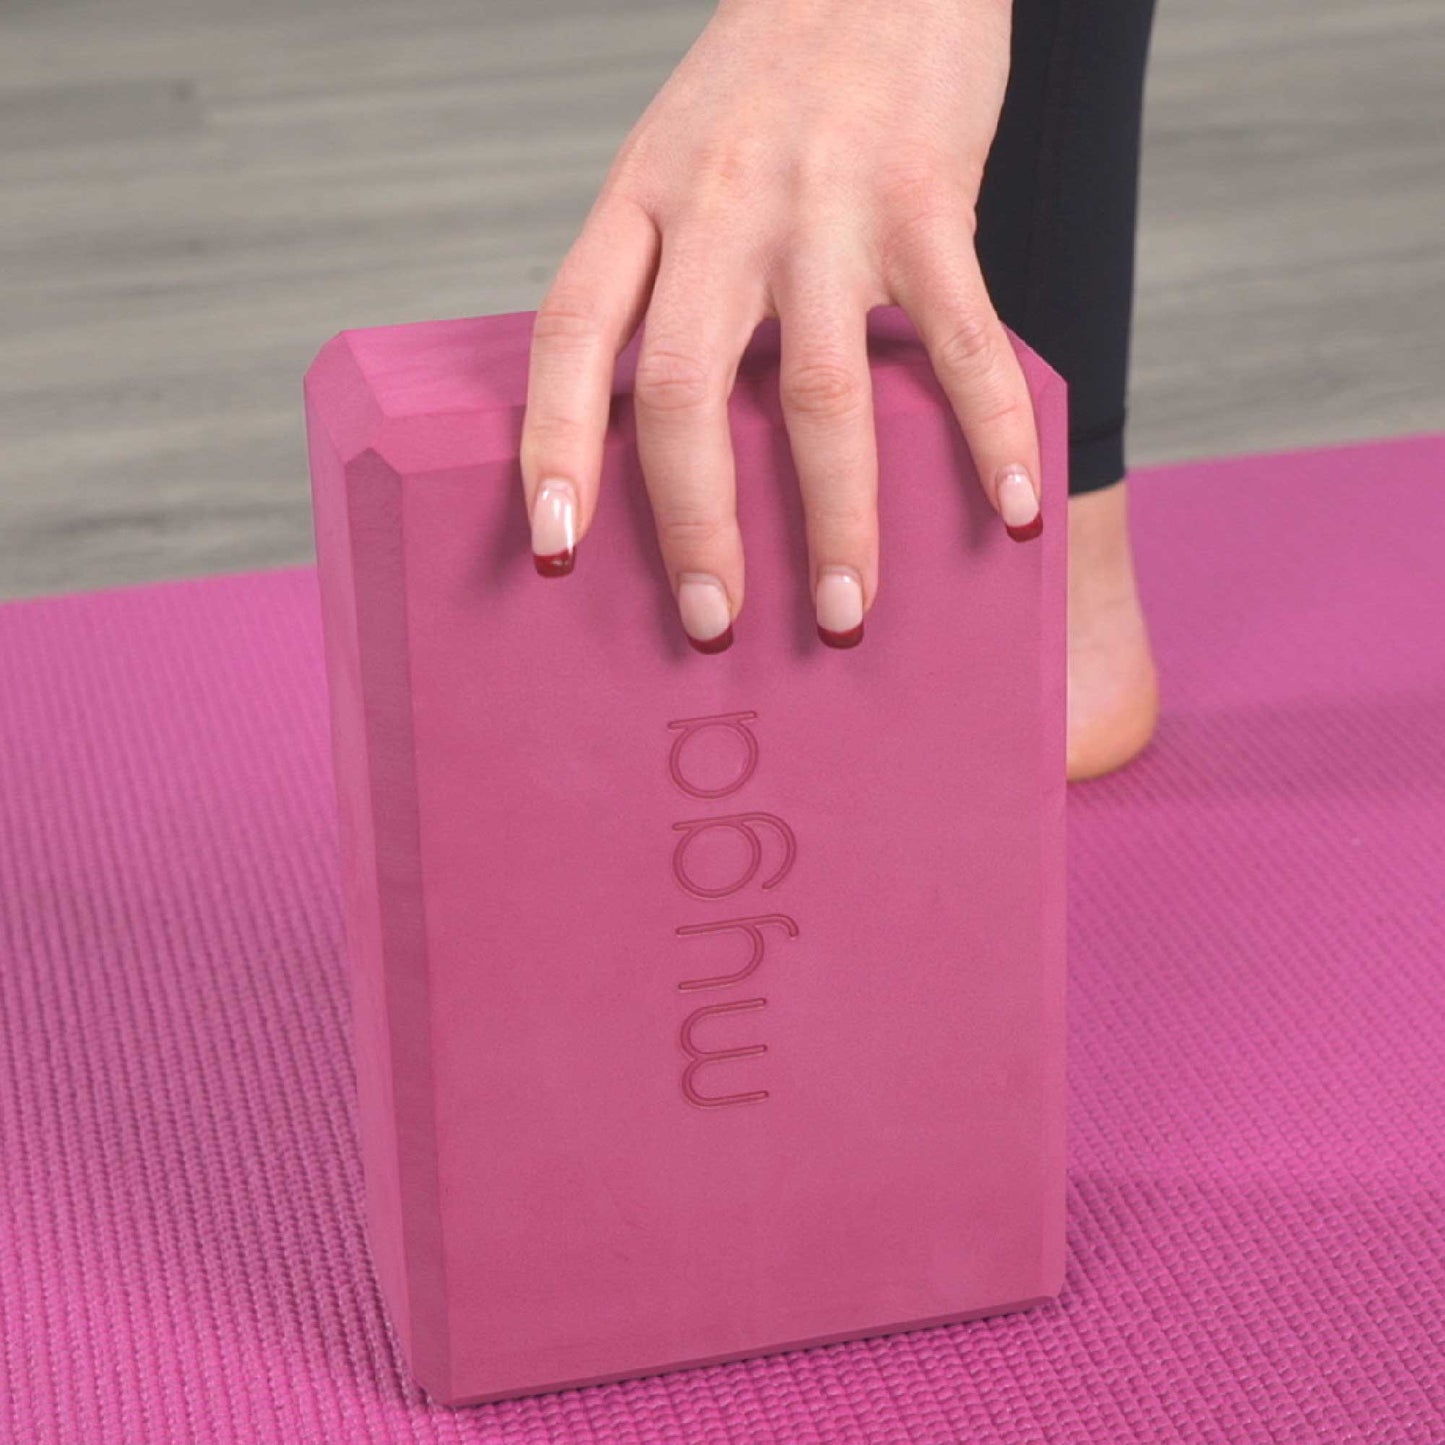 Foam Yoga Block - Plum